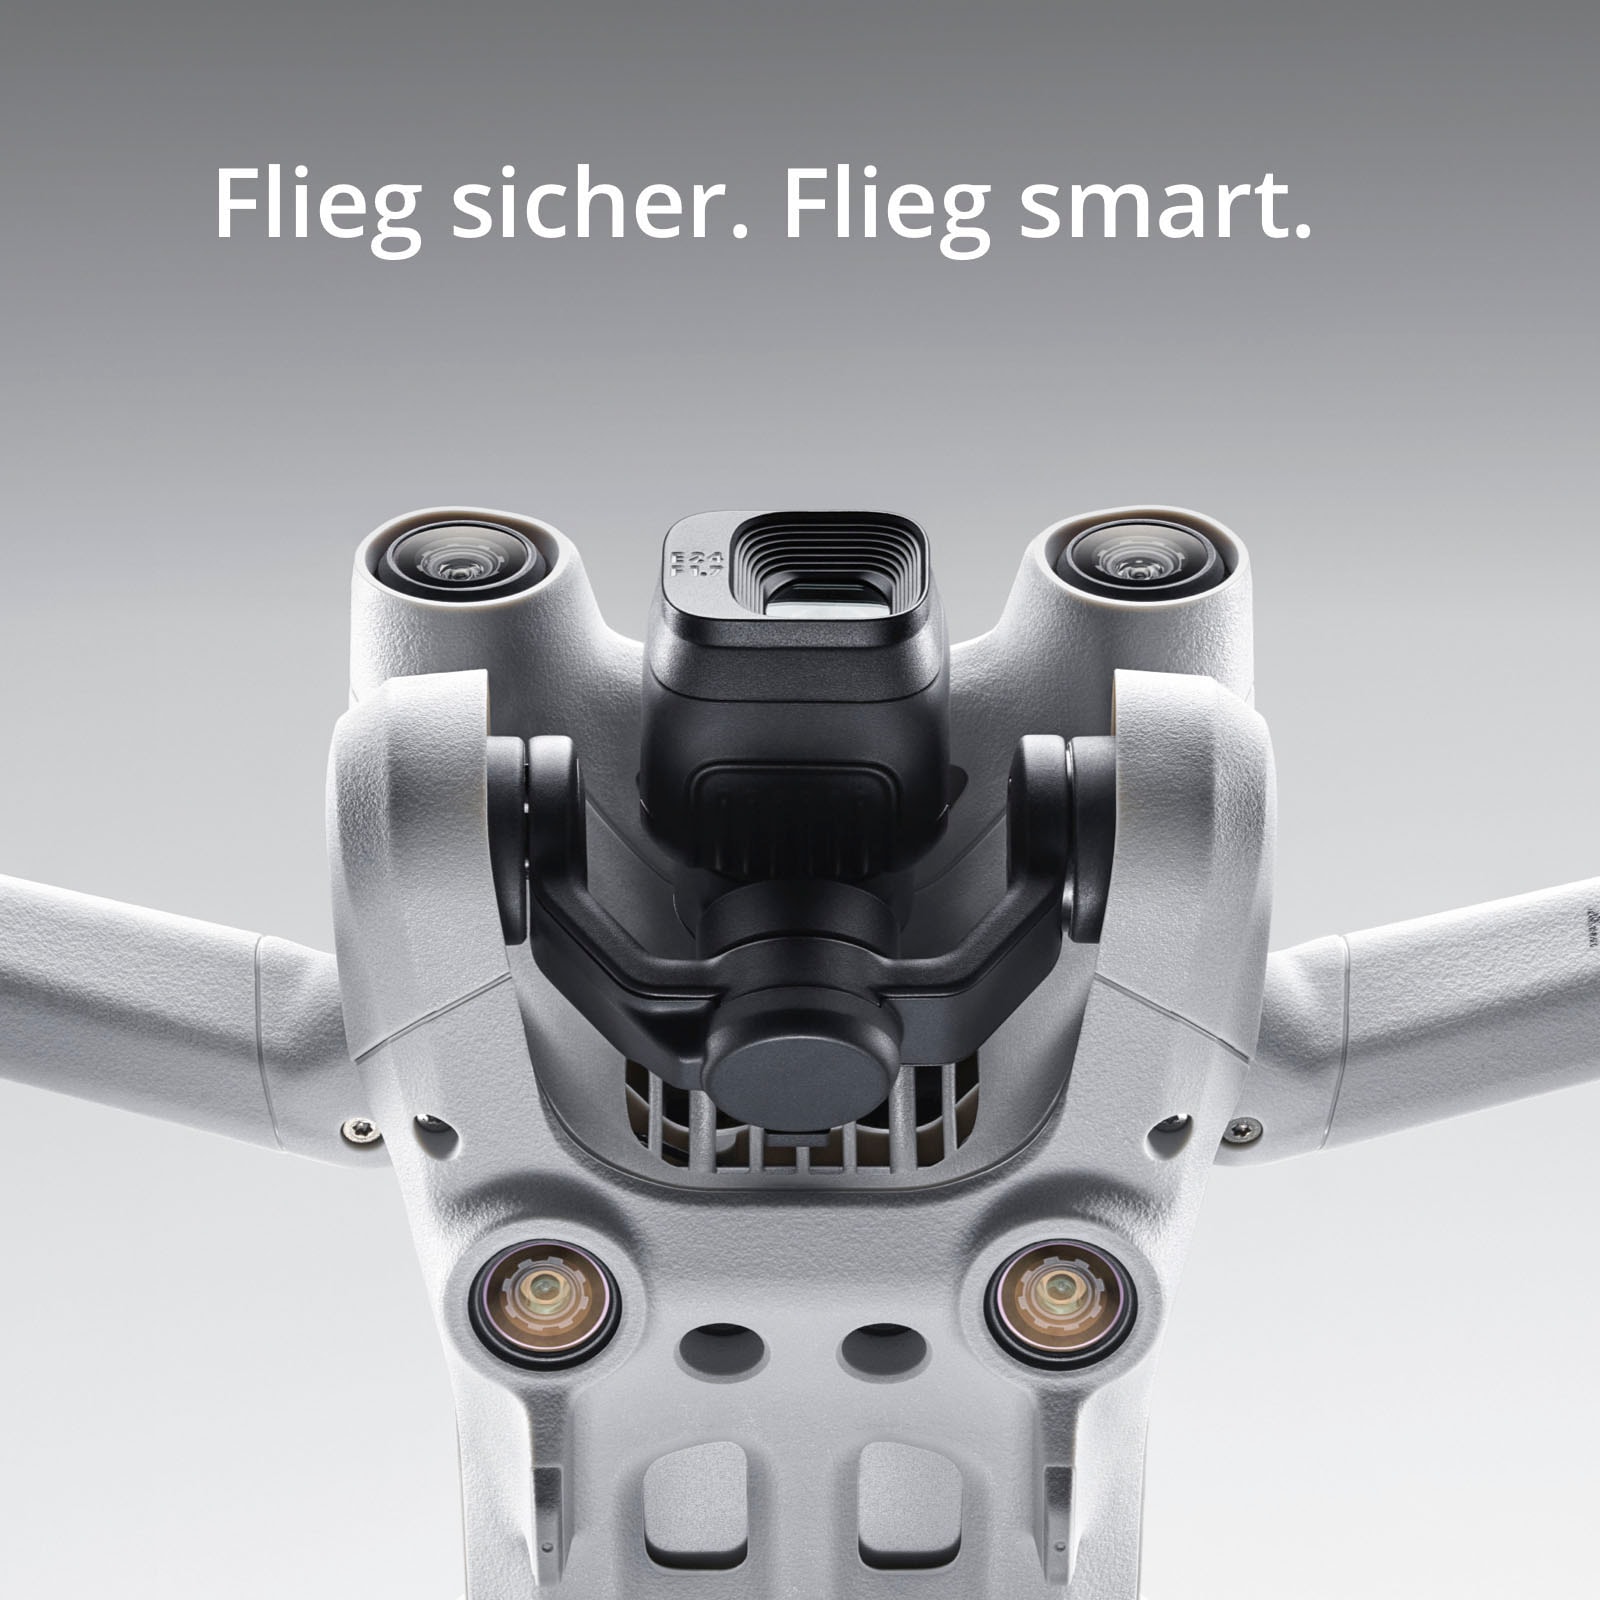 DJI Drohne »DJI Mini 3 Pro (DJI RC)«, Mini 3 Pro Fly More Kit unter Art. 97085663 bestellbar